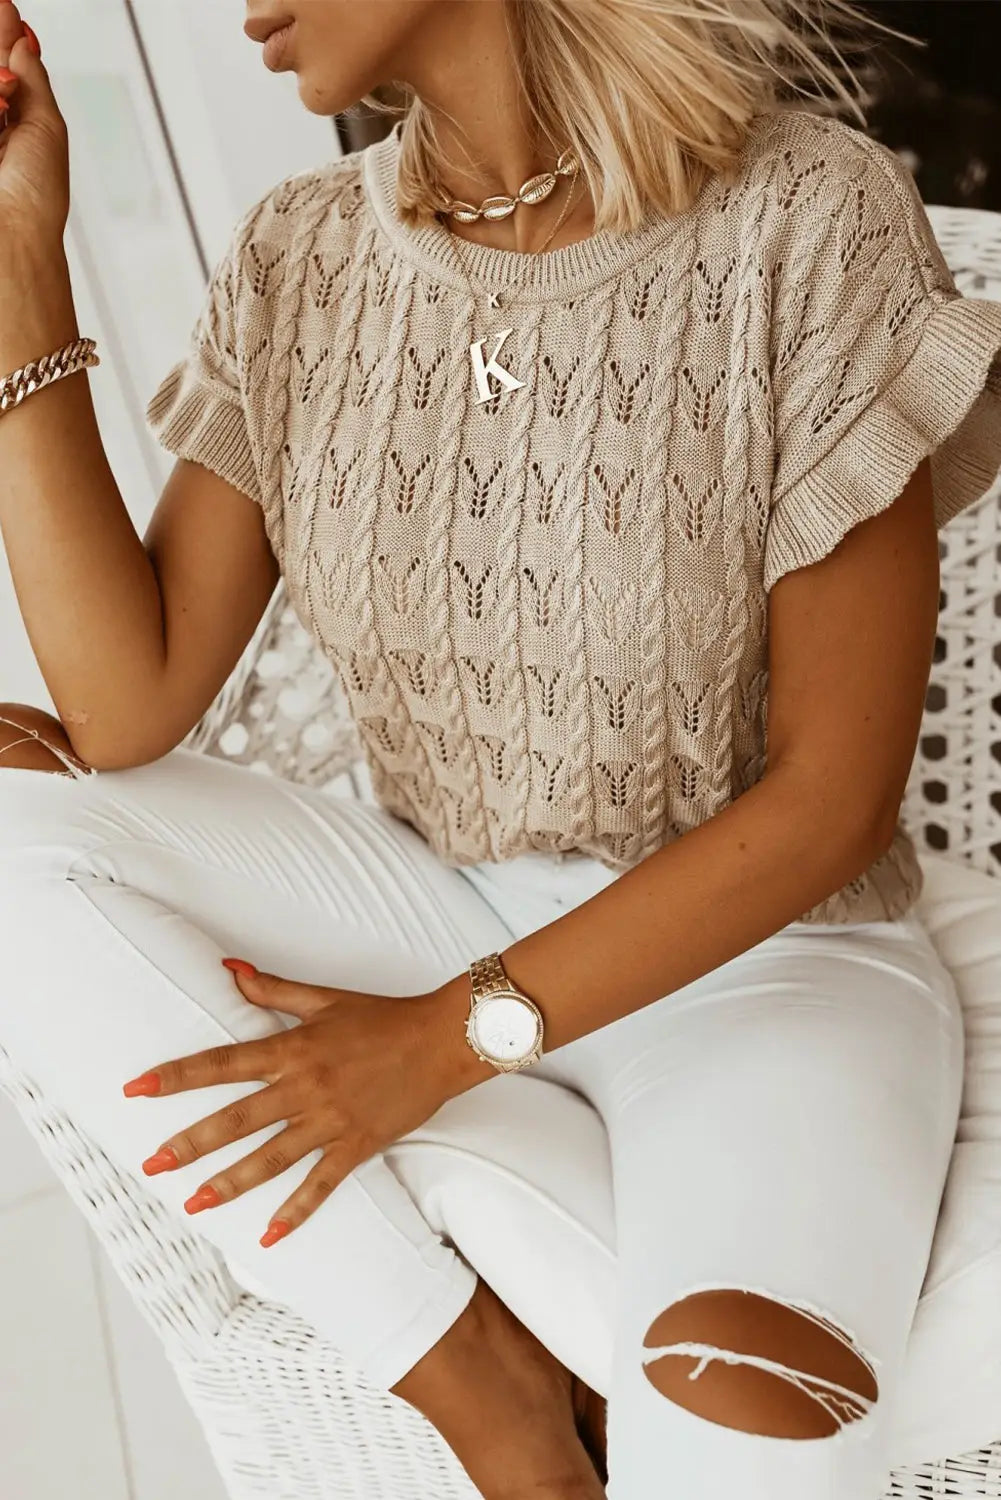 Khaki ruffle short sleeves cable knit textured top - t-shirts